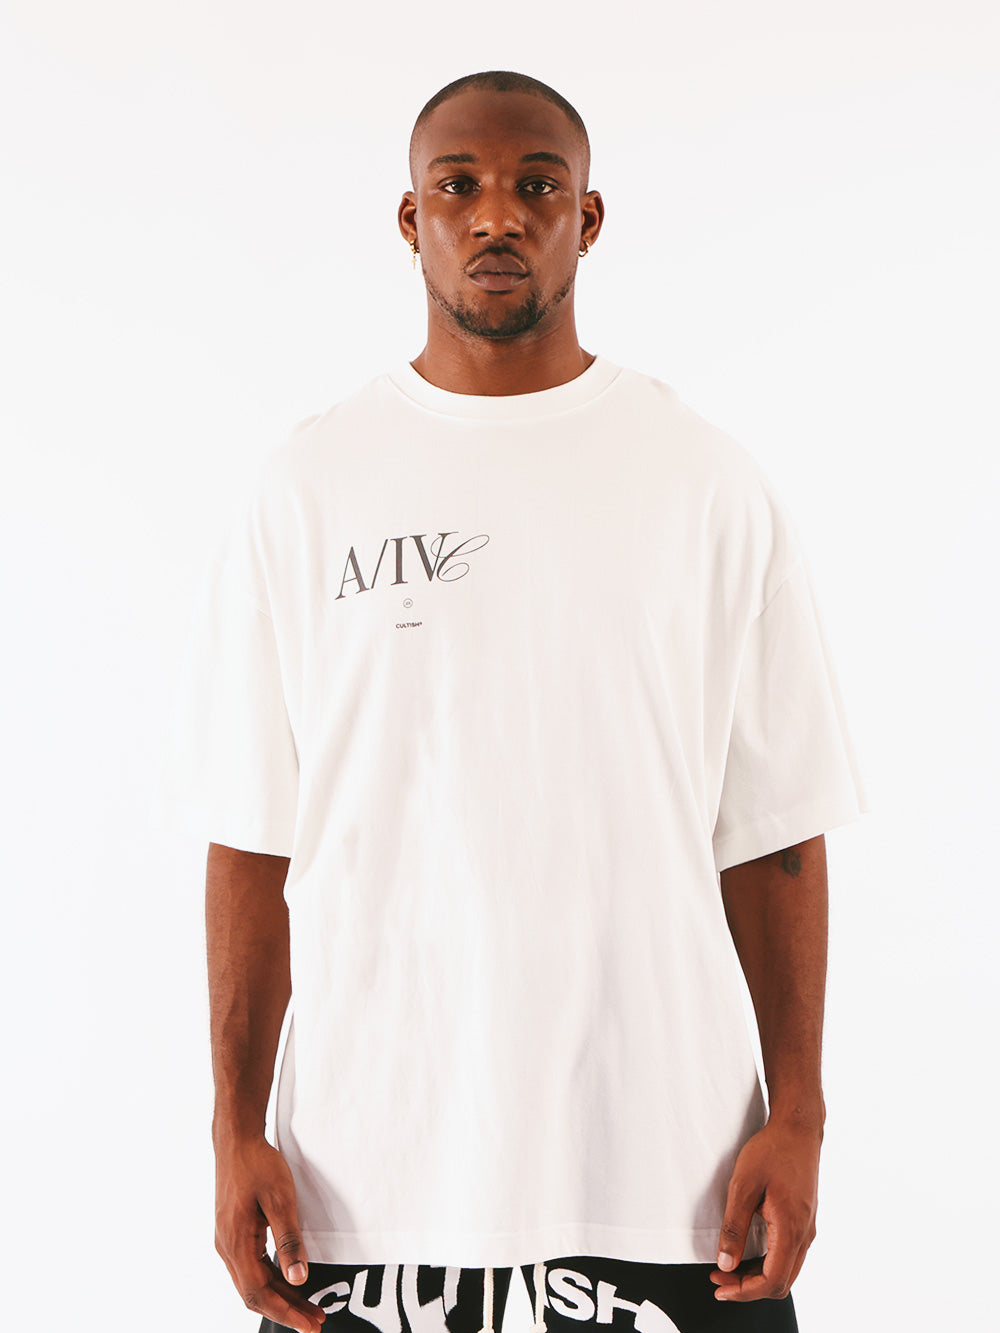 Sail A/IV Oversized T-Shirt